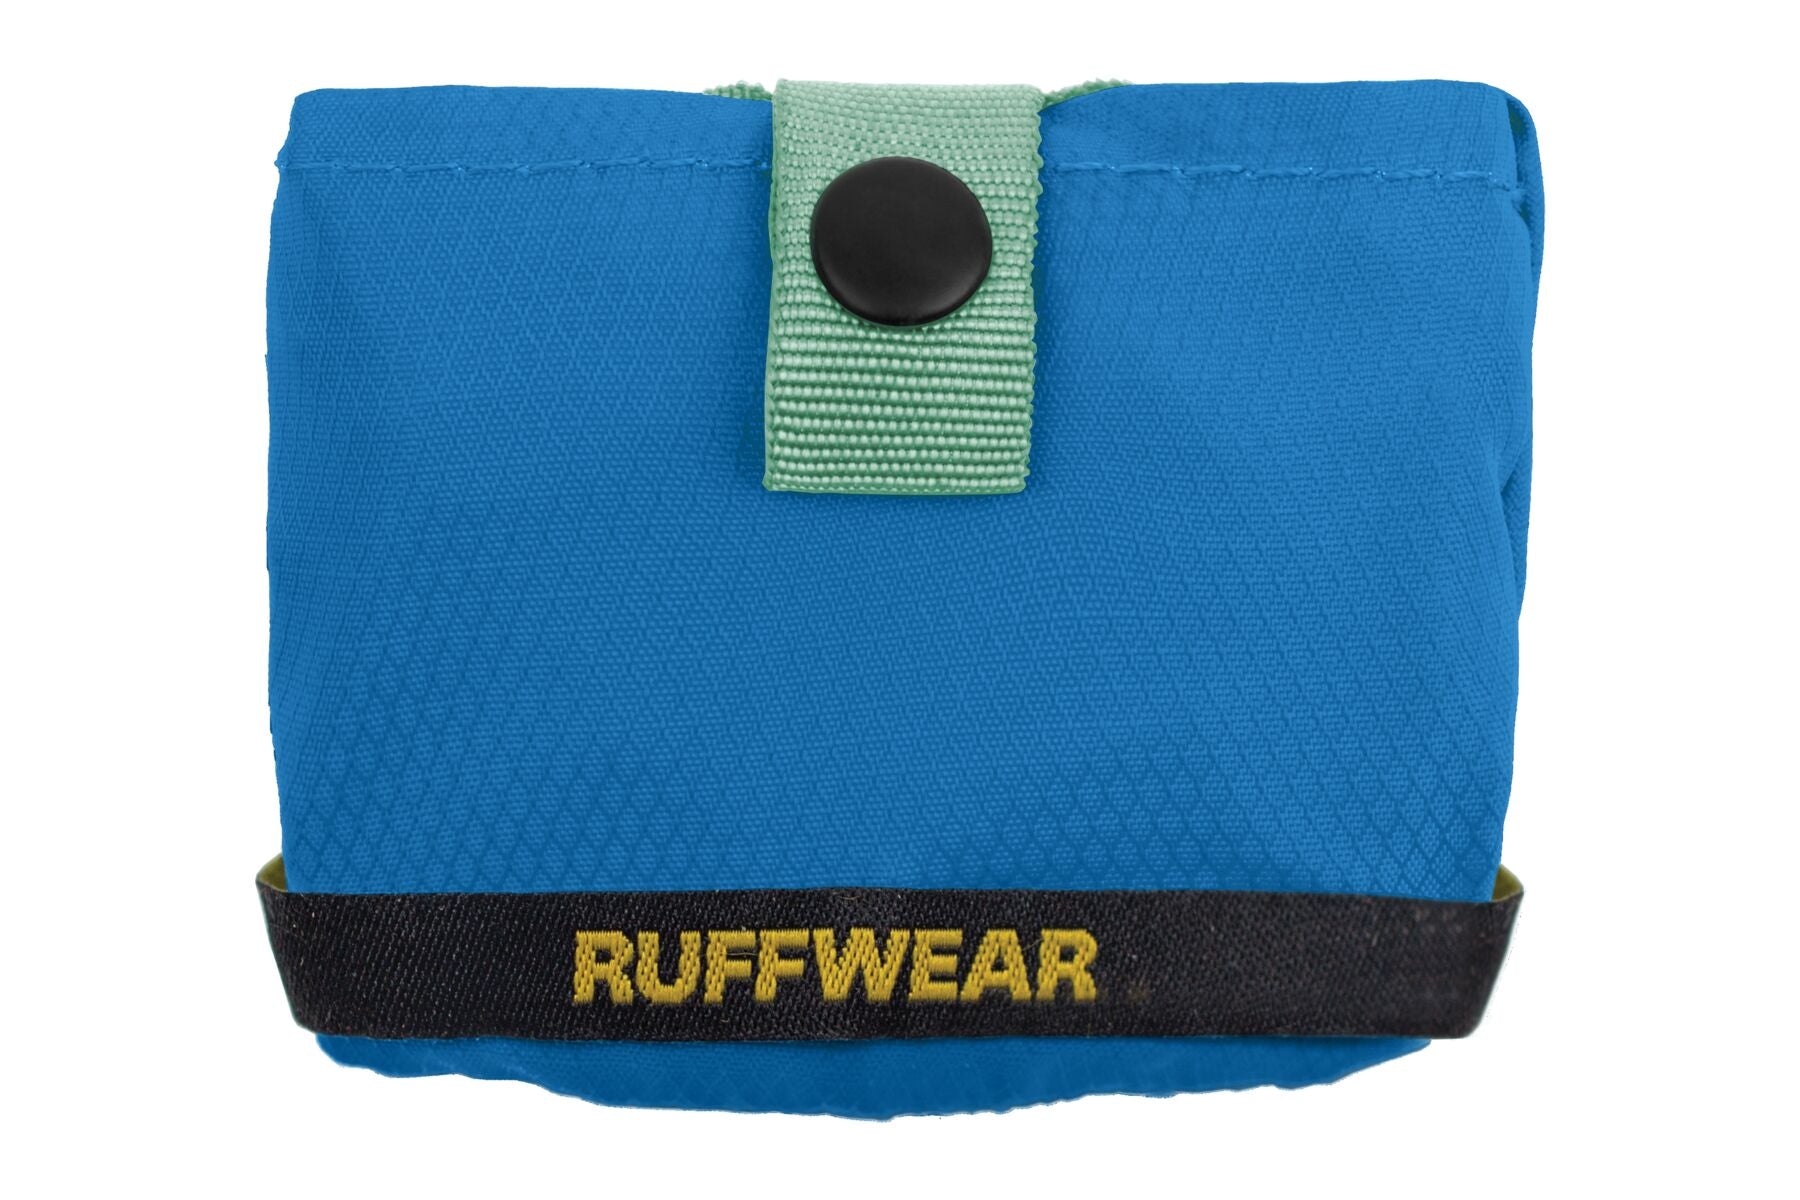 Trail Runner Bowl Plato Ultra Portátil y Colapsable en Azul (Blue Pool) - Ruffwear